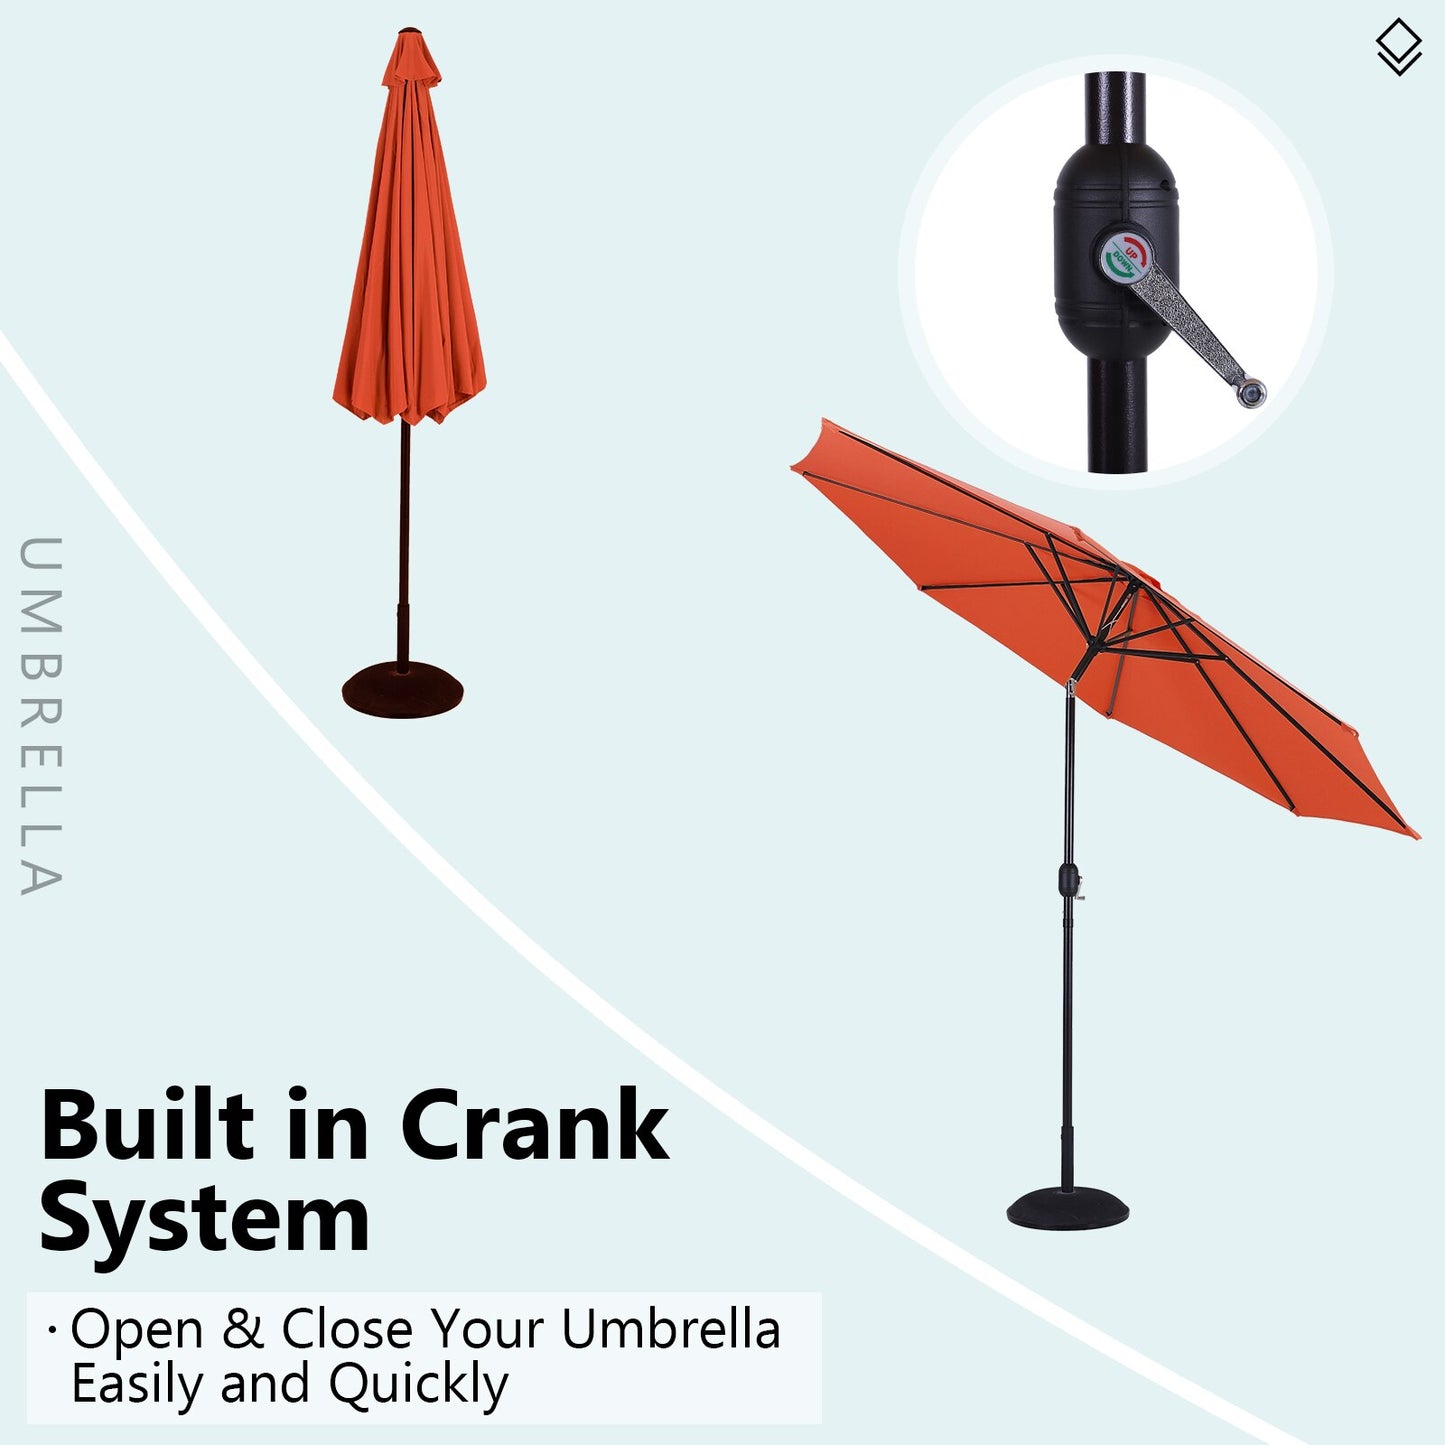 10Ft Patio Umbrella with 8 Sturdy Ribs Outdoor Market Table Umbrellas with Push Button Tilt/crank, Orange (Us Stock)